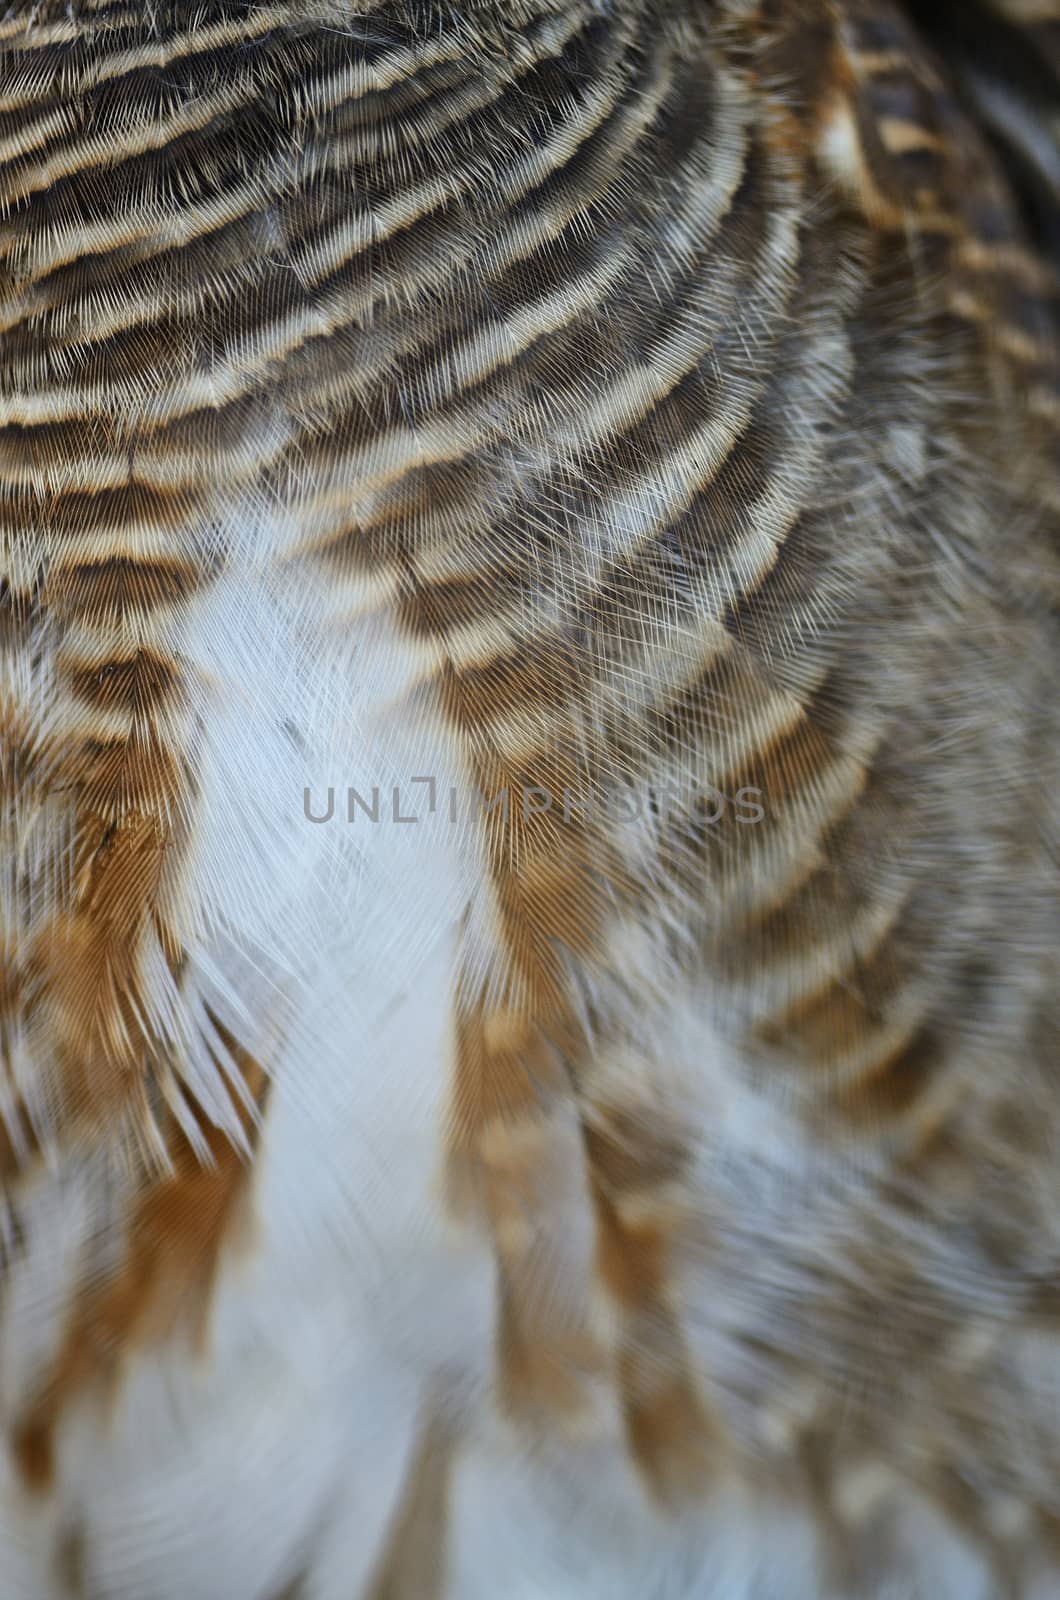 Closeup Asian Barred Owlet feathers